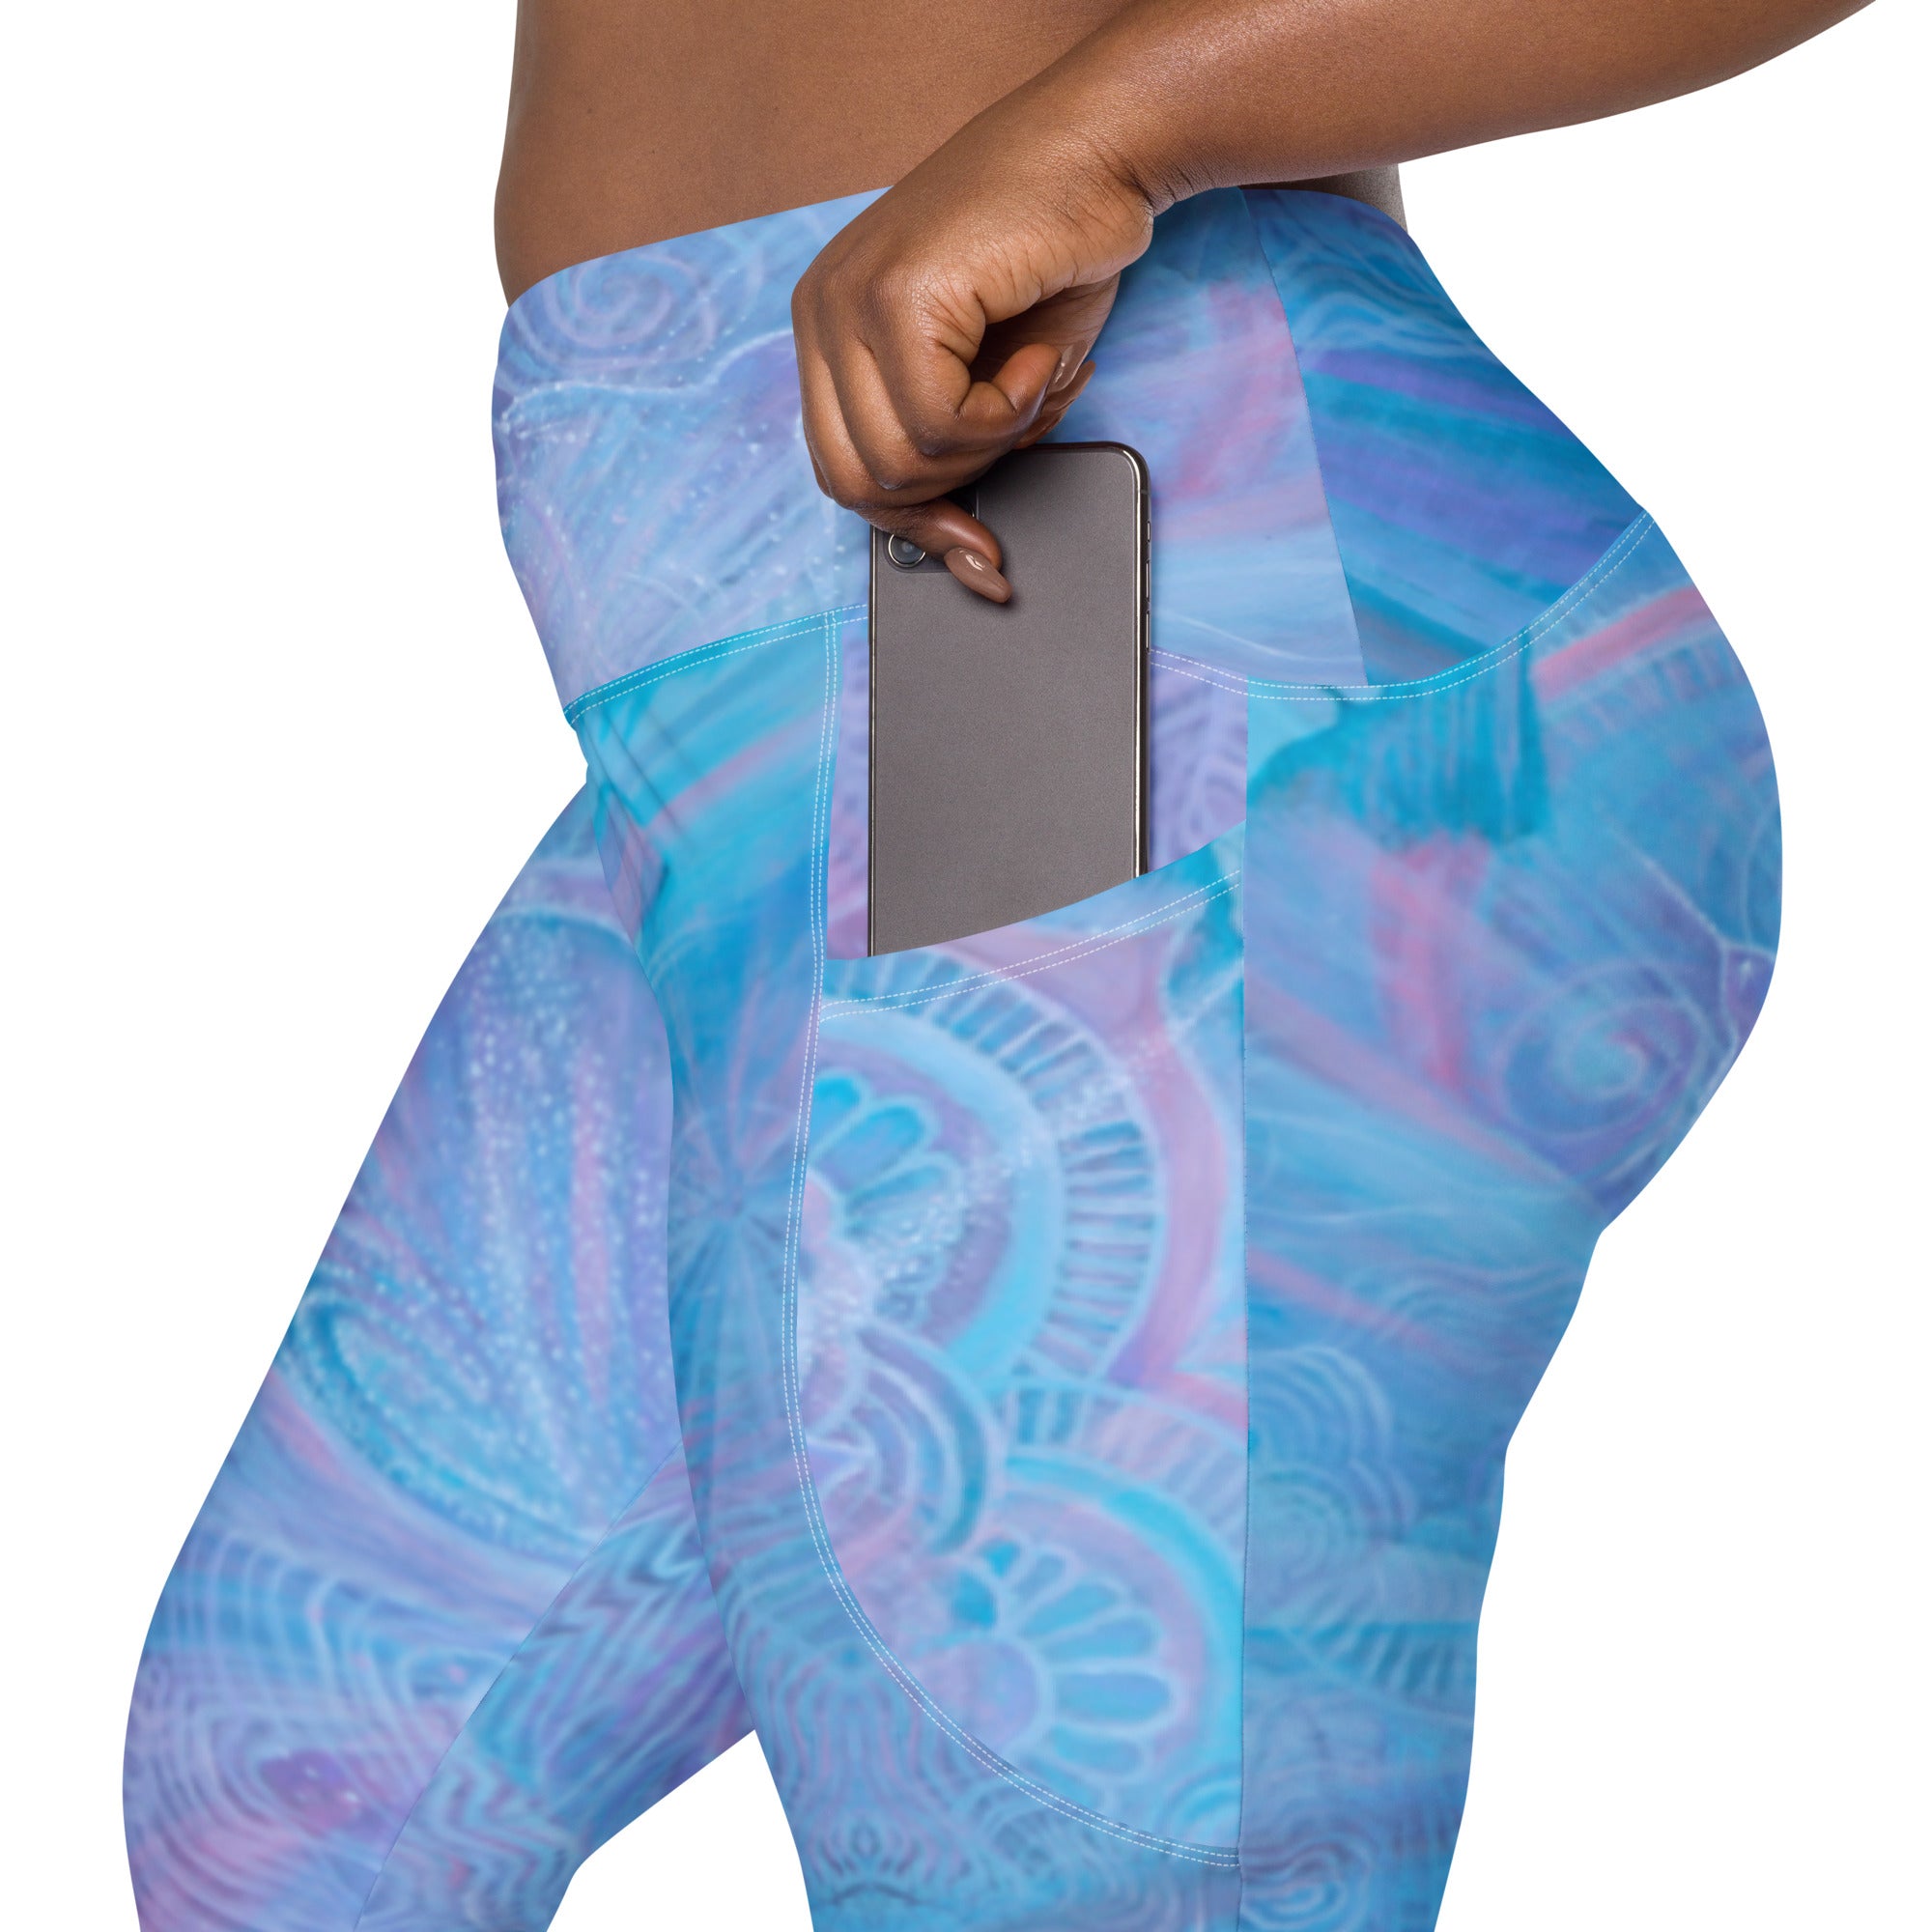 Pure medicine' Crossover leggings with pockets – Cosmic Uterus